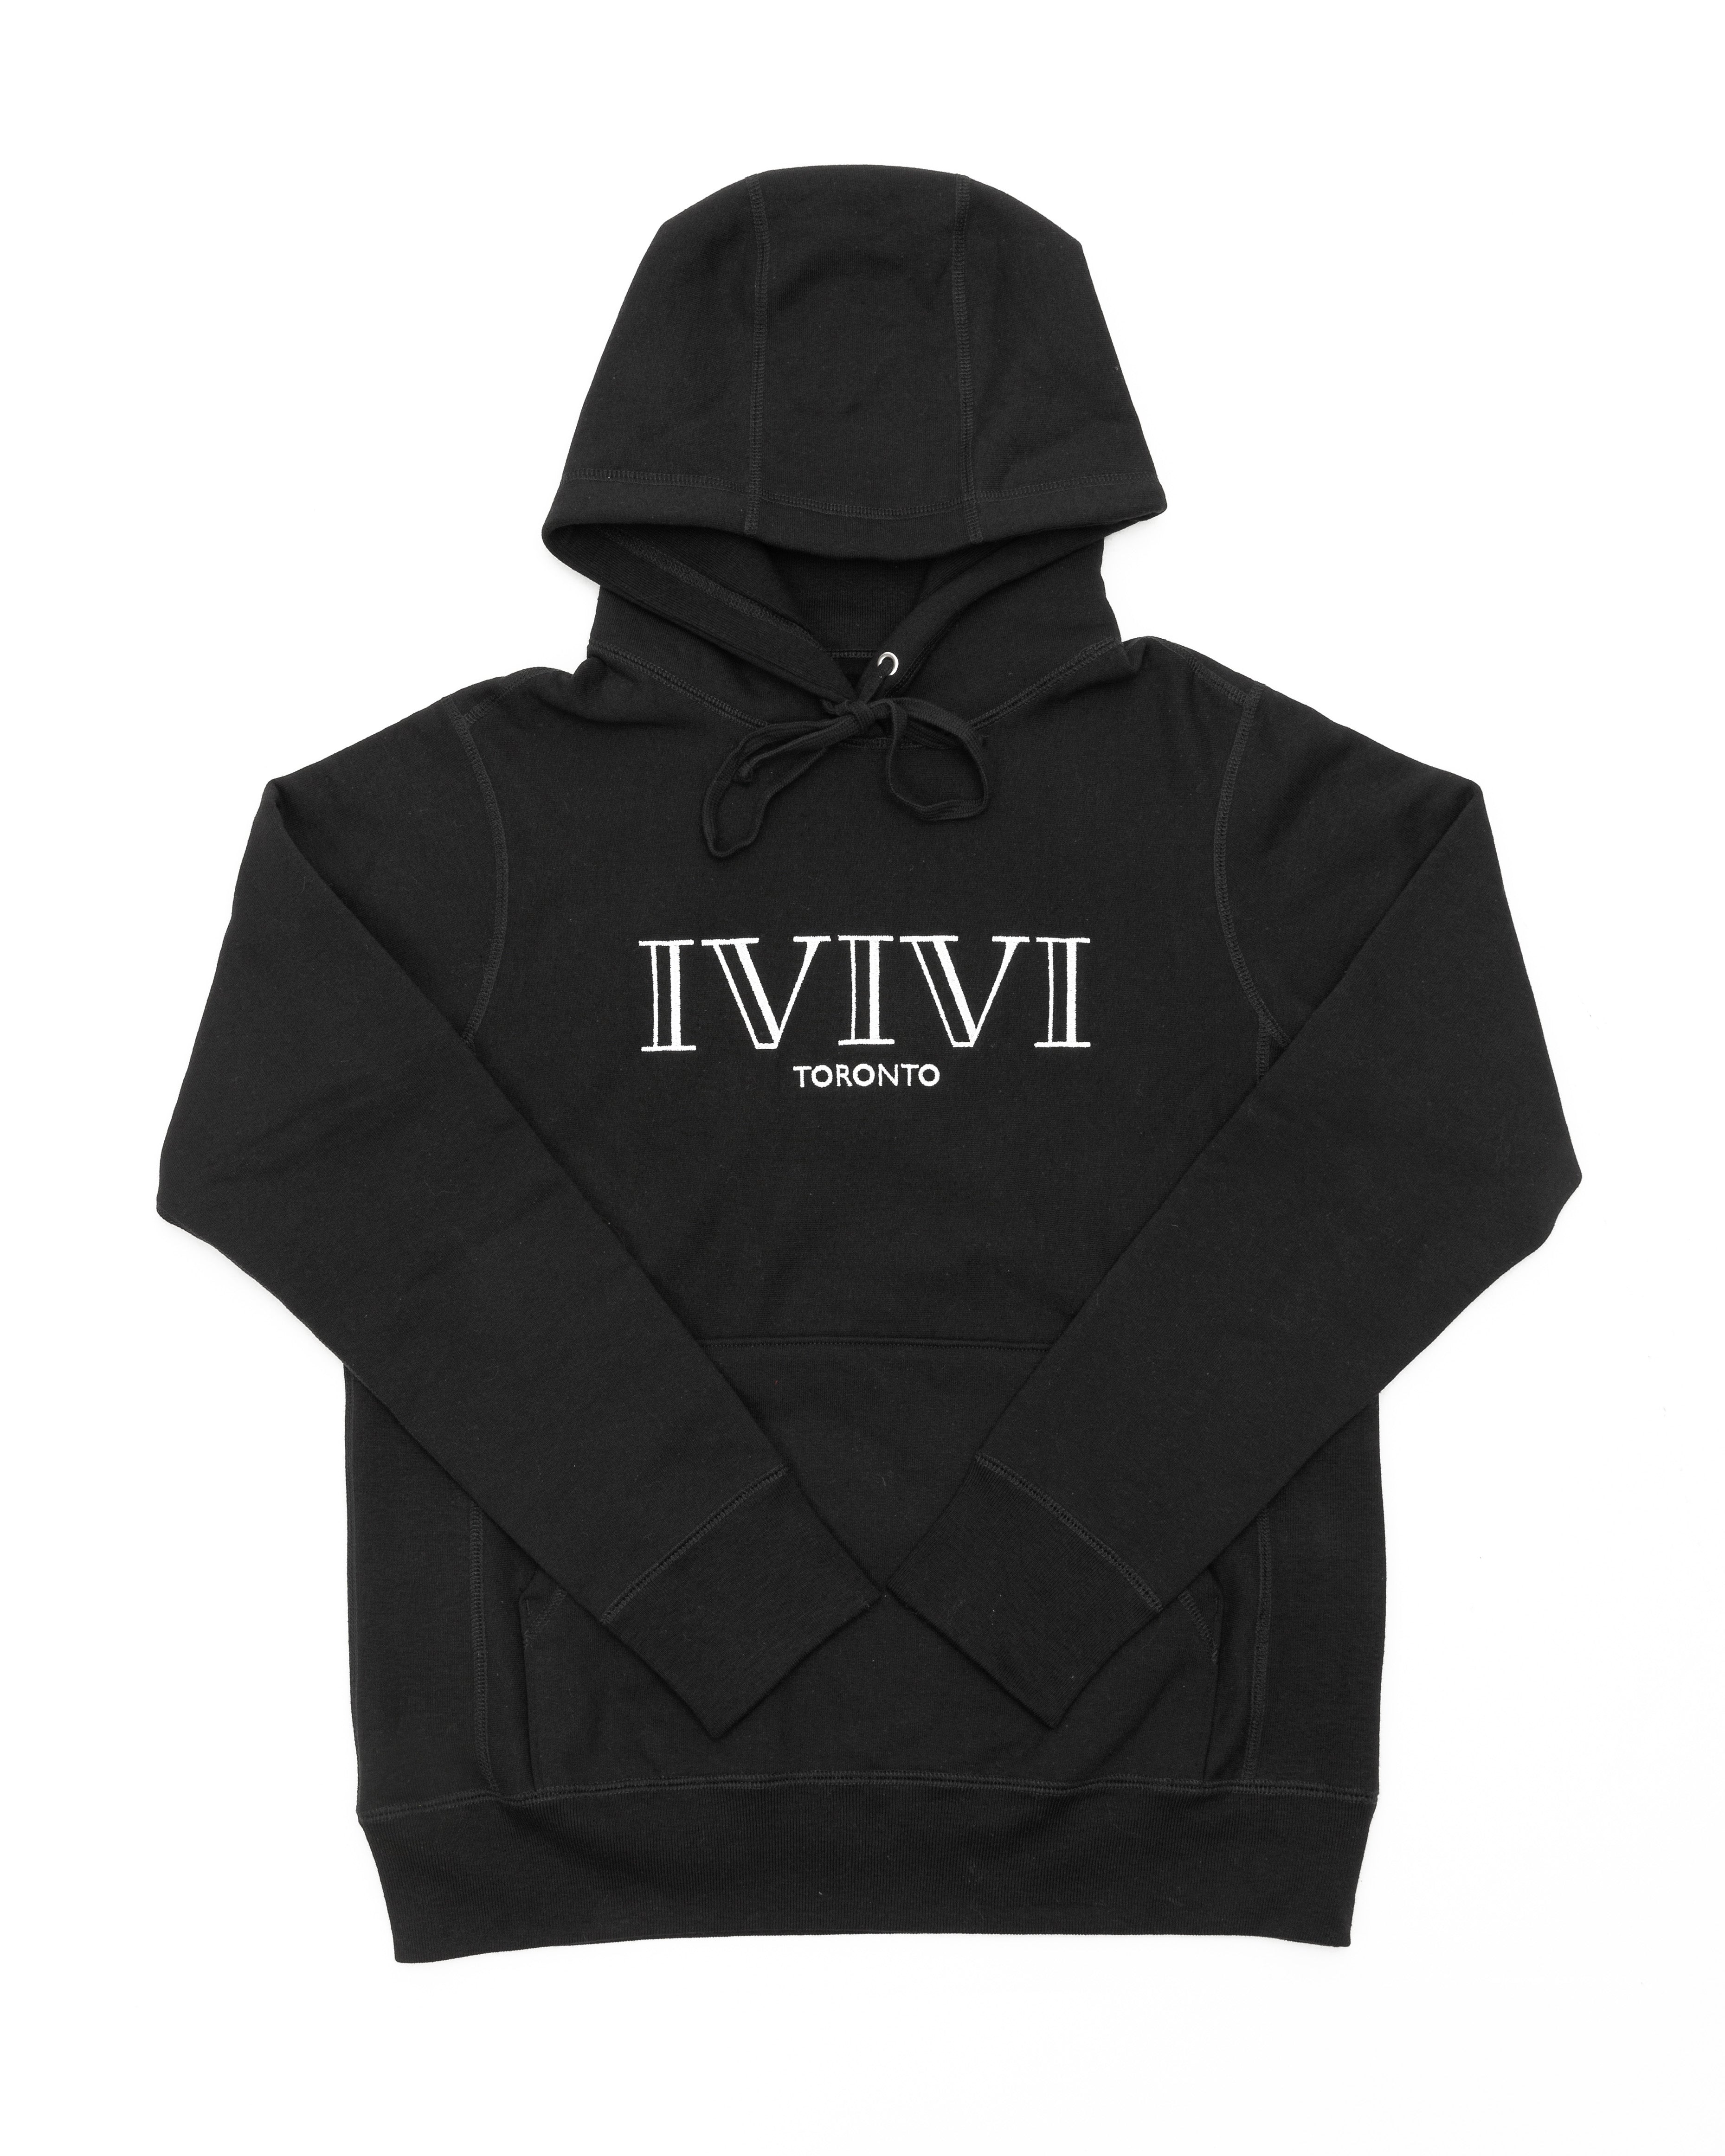 Savvi Fit Black Savvi Sweatshirt- Size XS (See Notes) – The